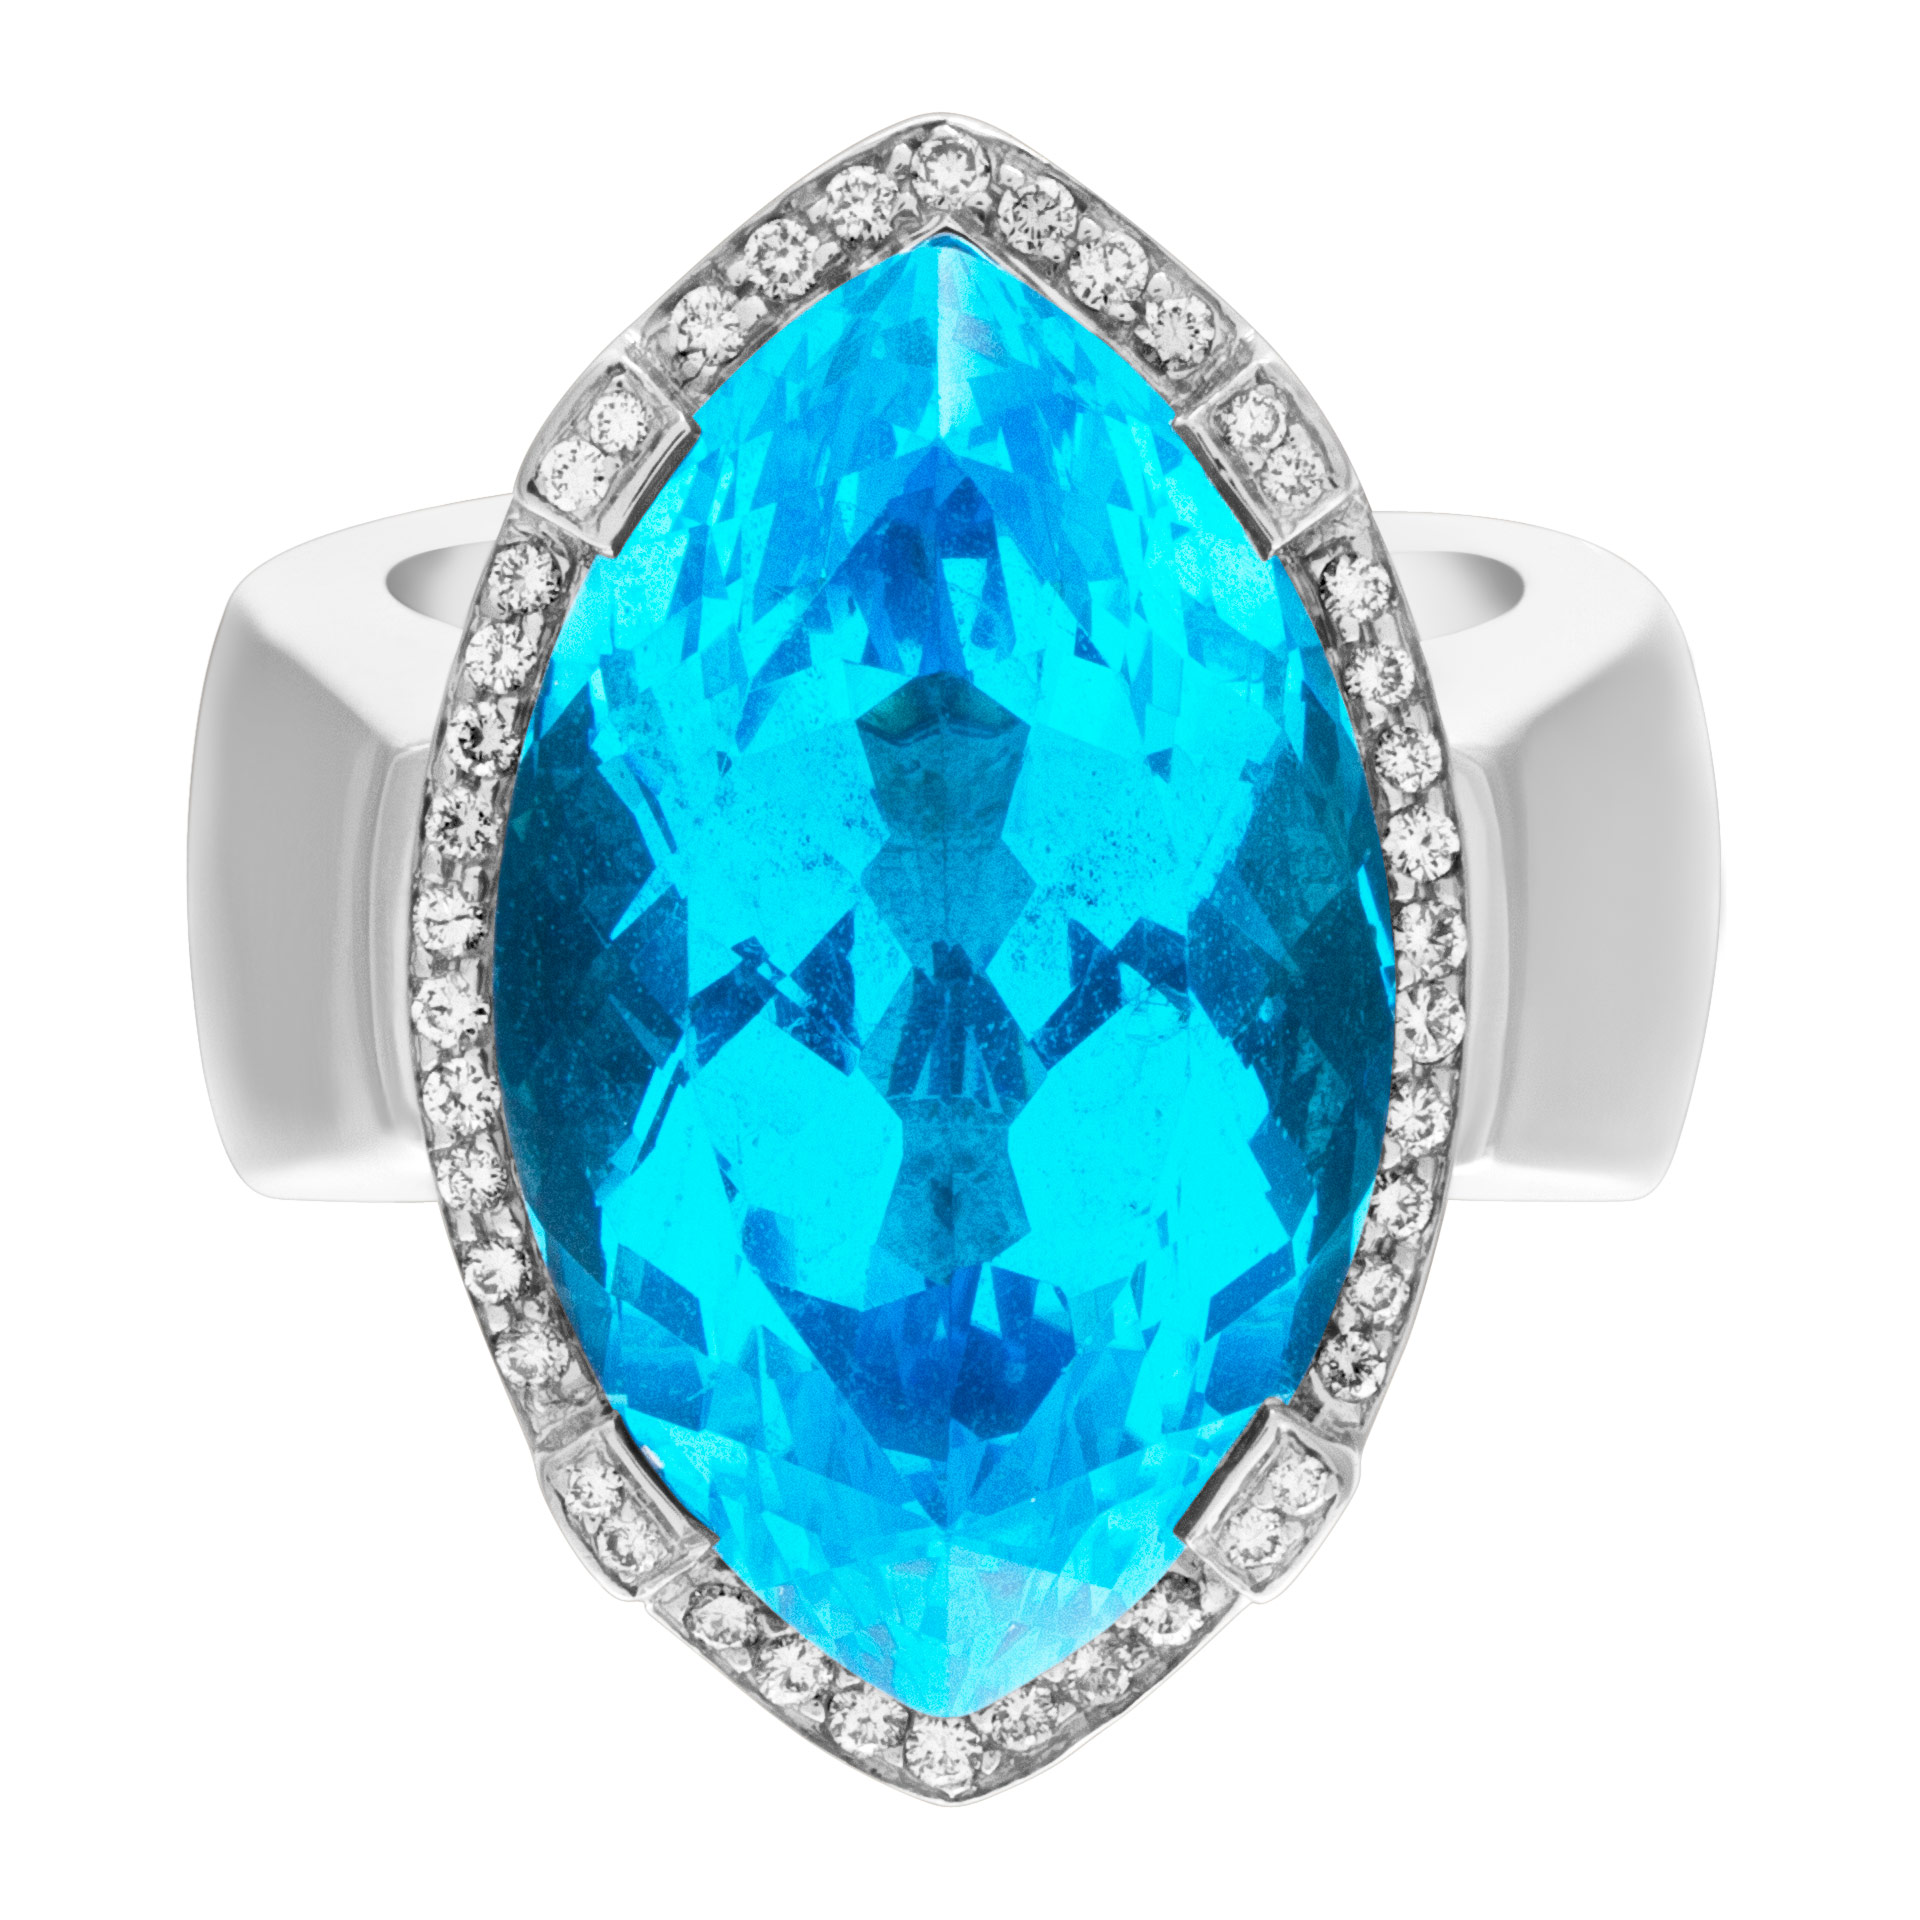 Marquise cut Royal Blue topaz & diamonds ring set in 18k white gold.